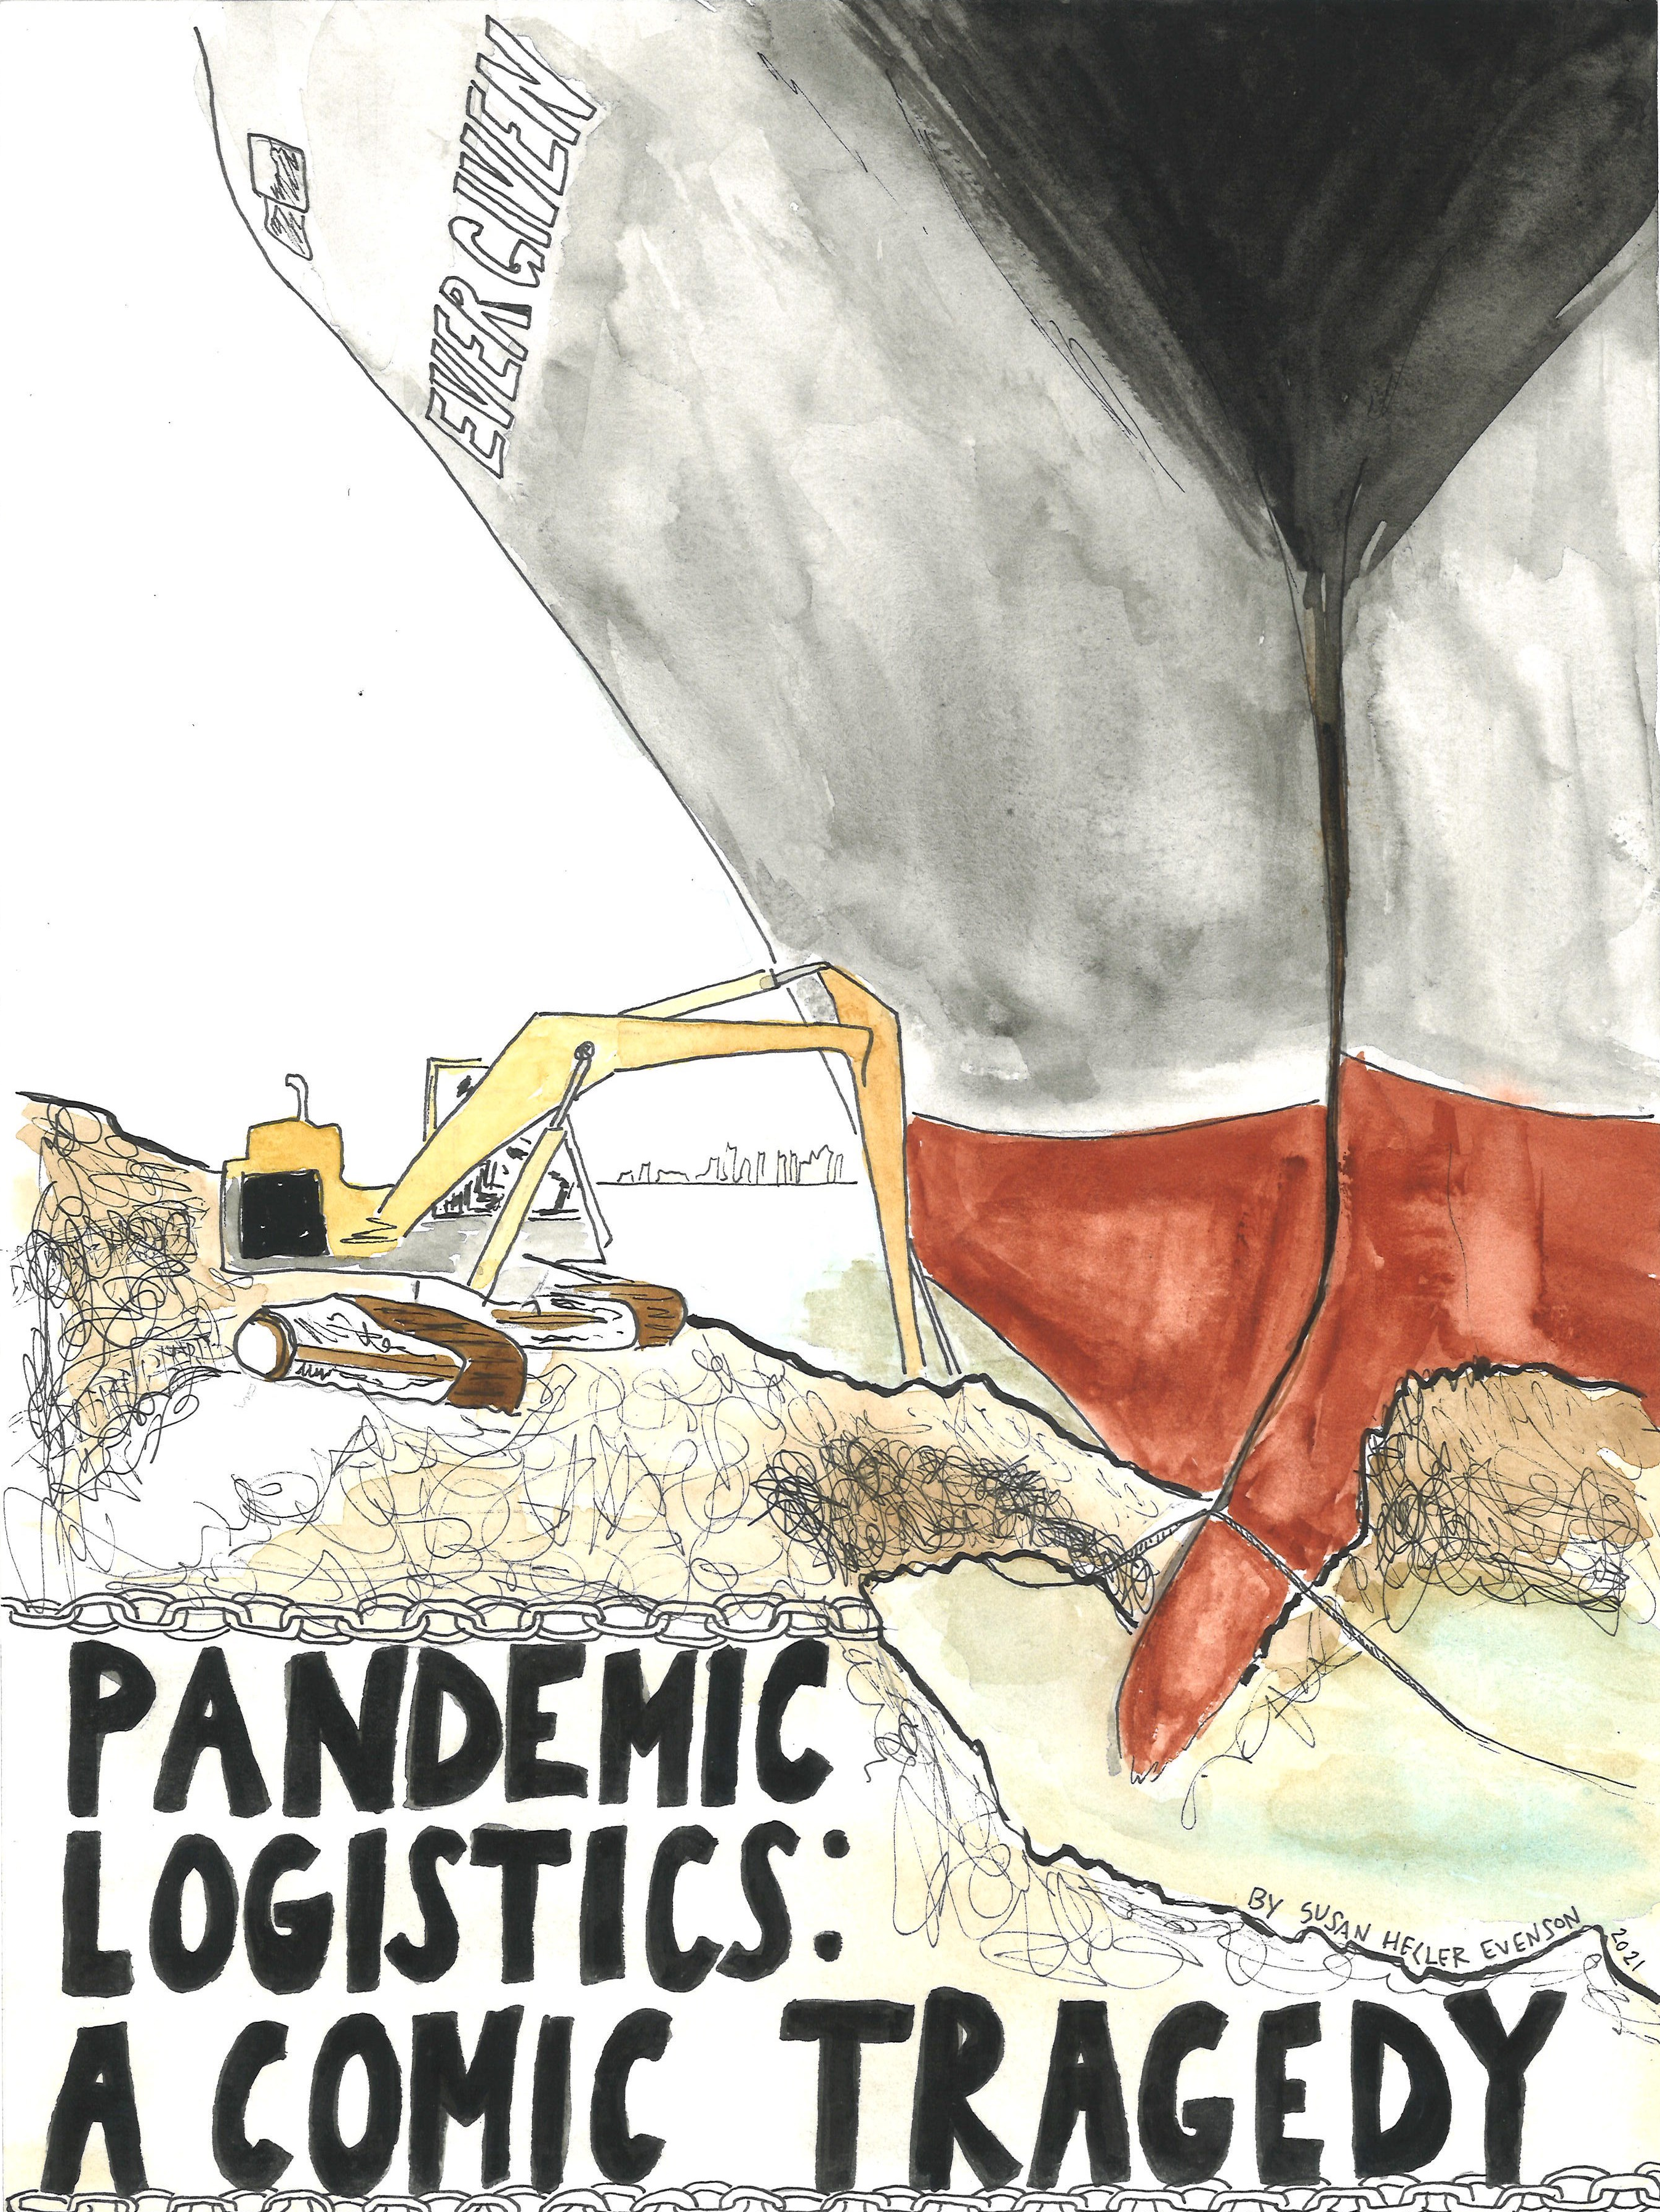 Pandemic logistics in coffee